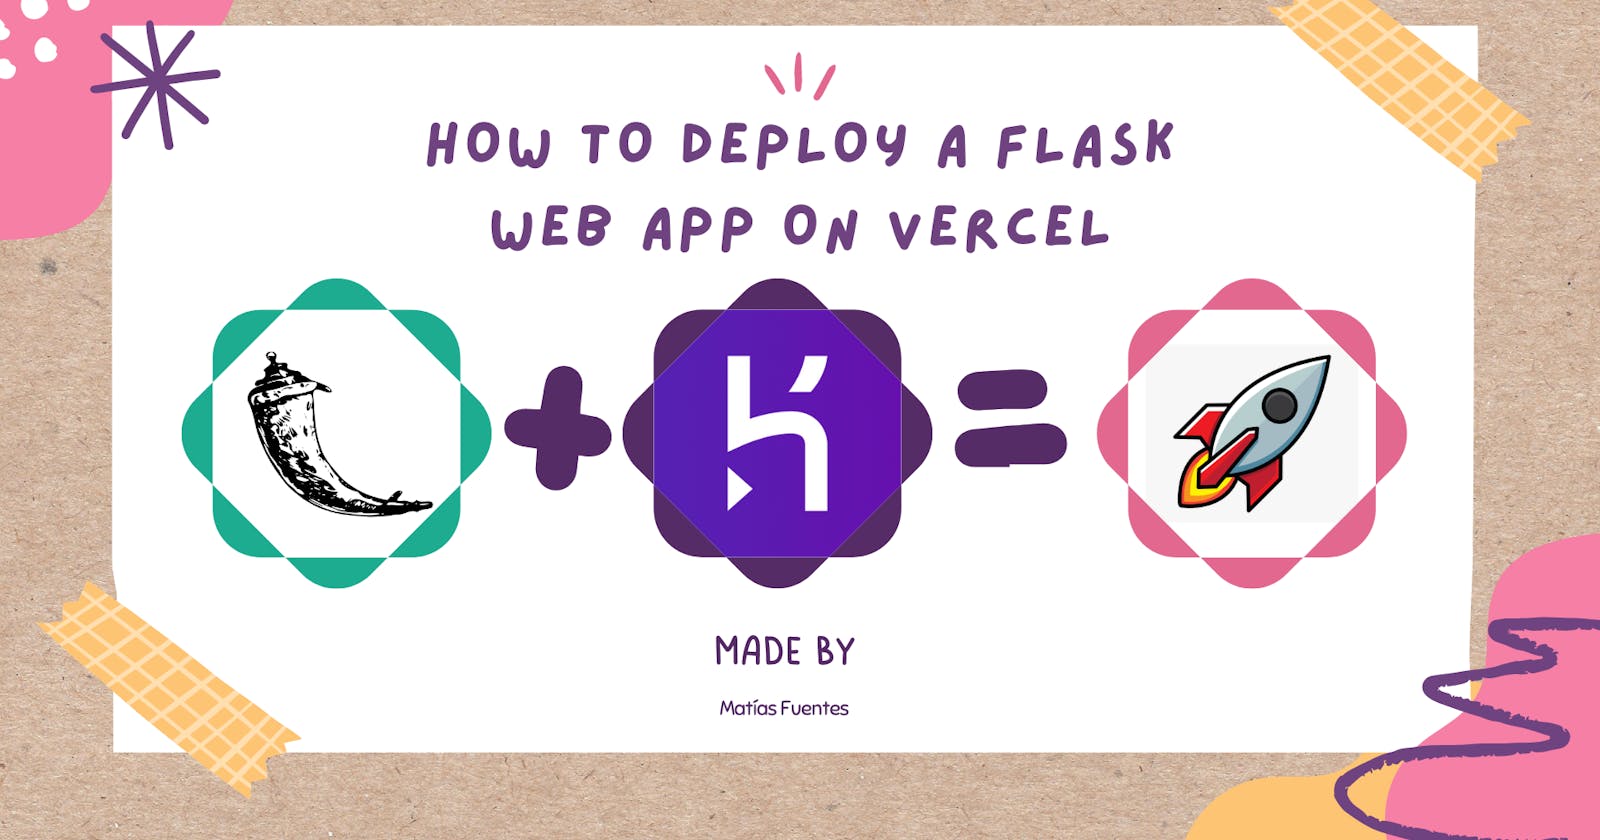 How to Deploy a Flask Web App on Vercel